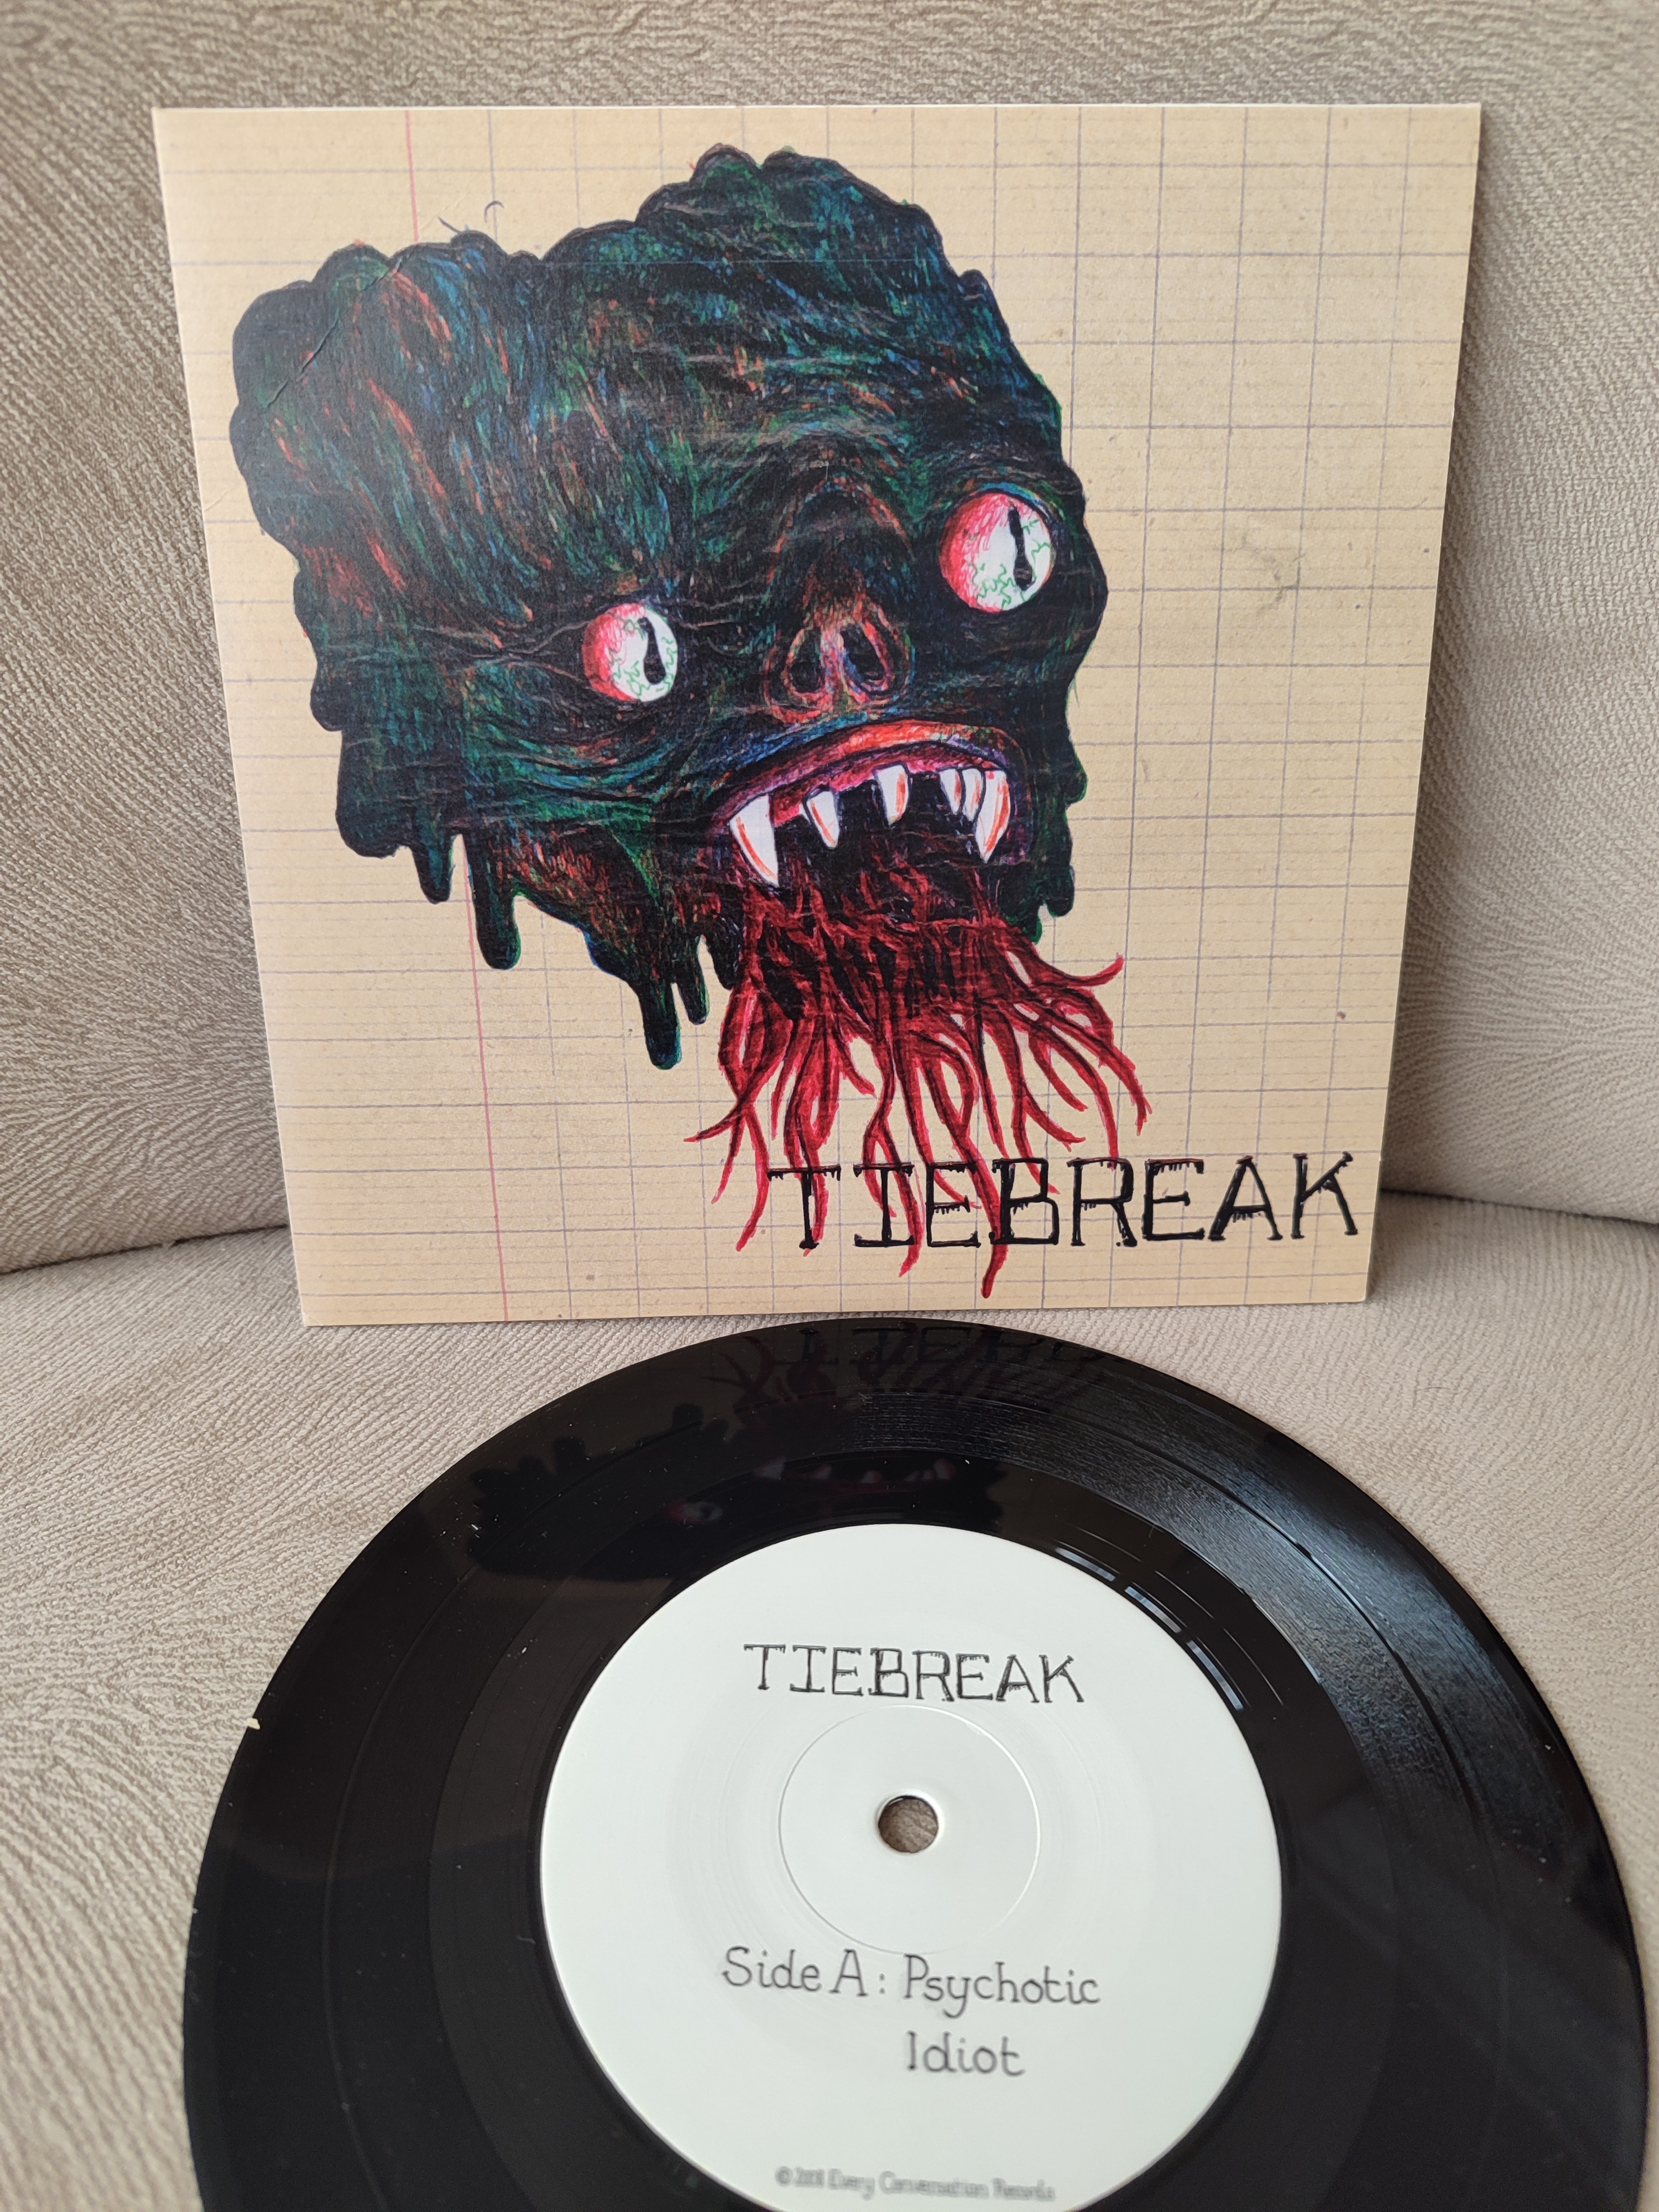 TIEBREAK - Tiebreak - 2008 Japonya Basım 45lik Plak - Psychedelic Rock 2. EL